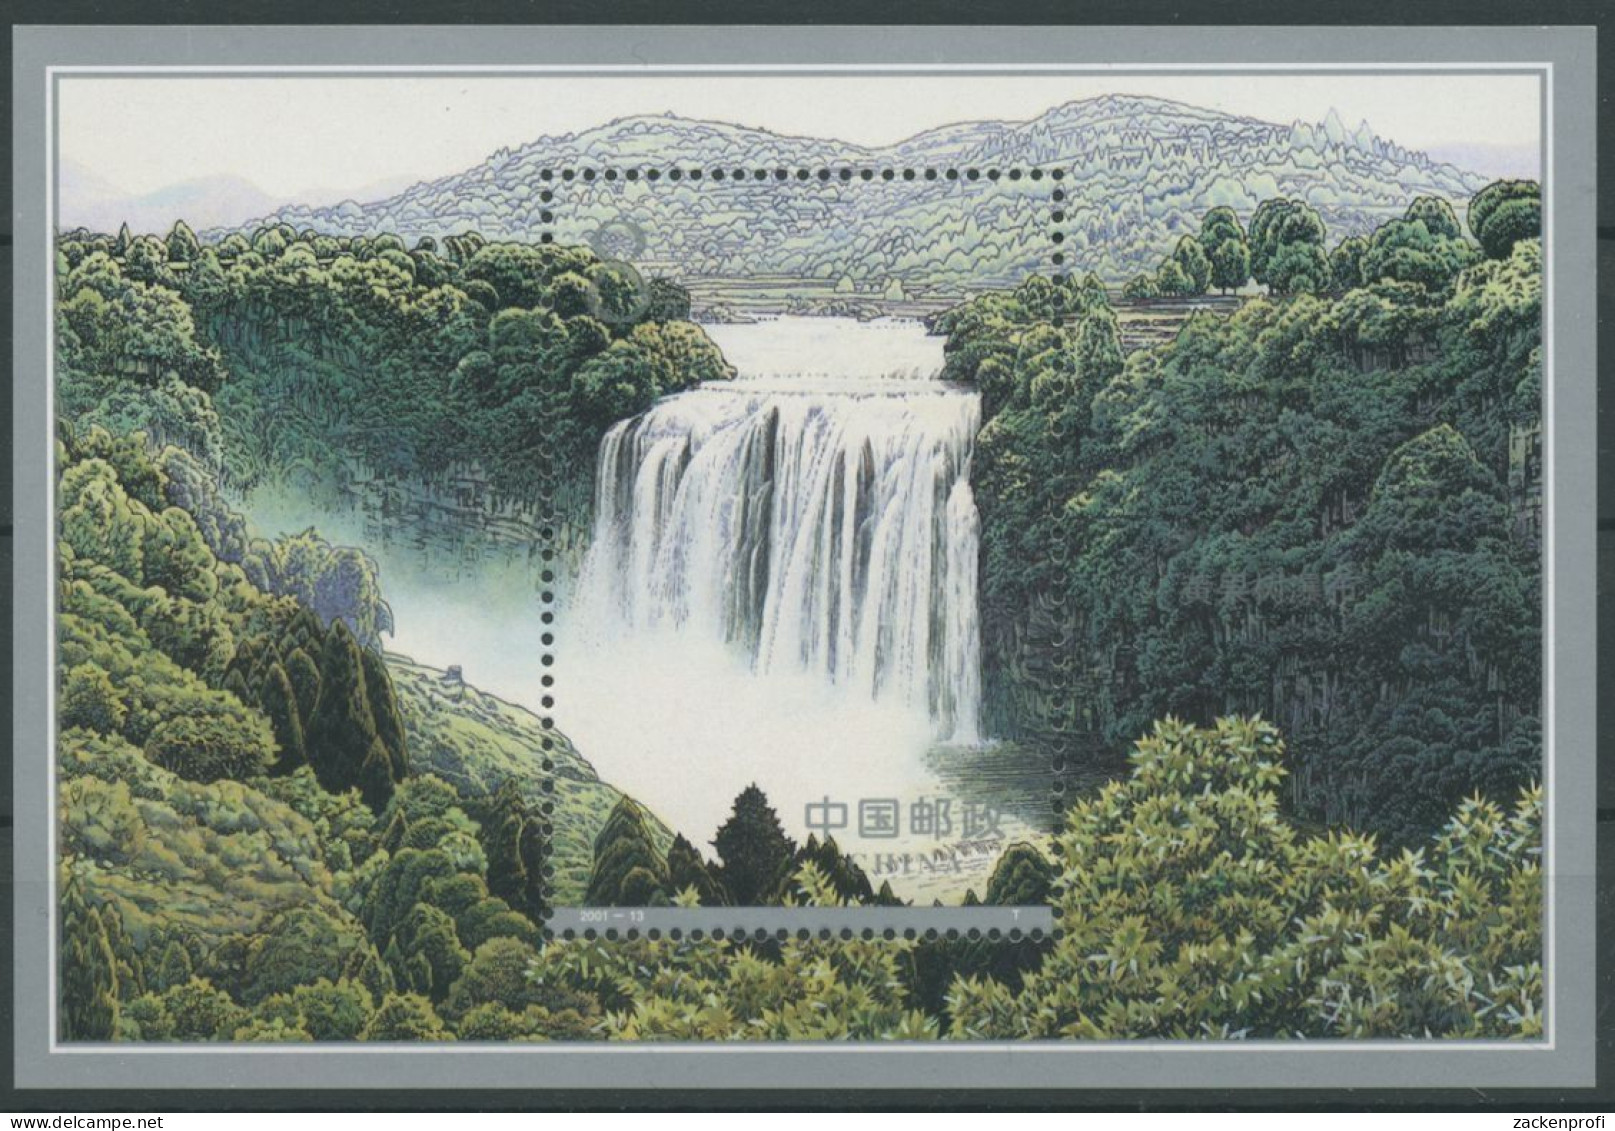 China 2001 Wasserfall Huangguoshu Block 99 Postfrisch (C8262) - Blocs-feuillets